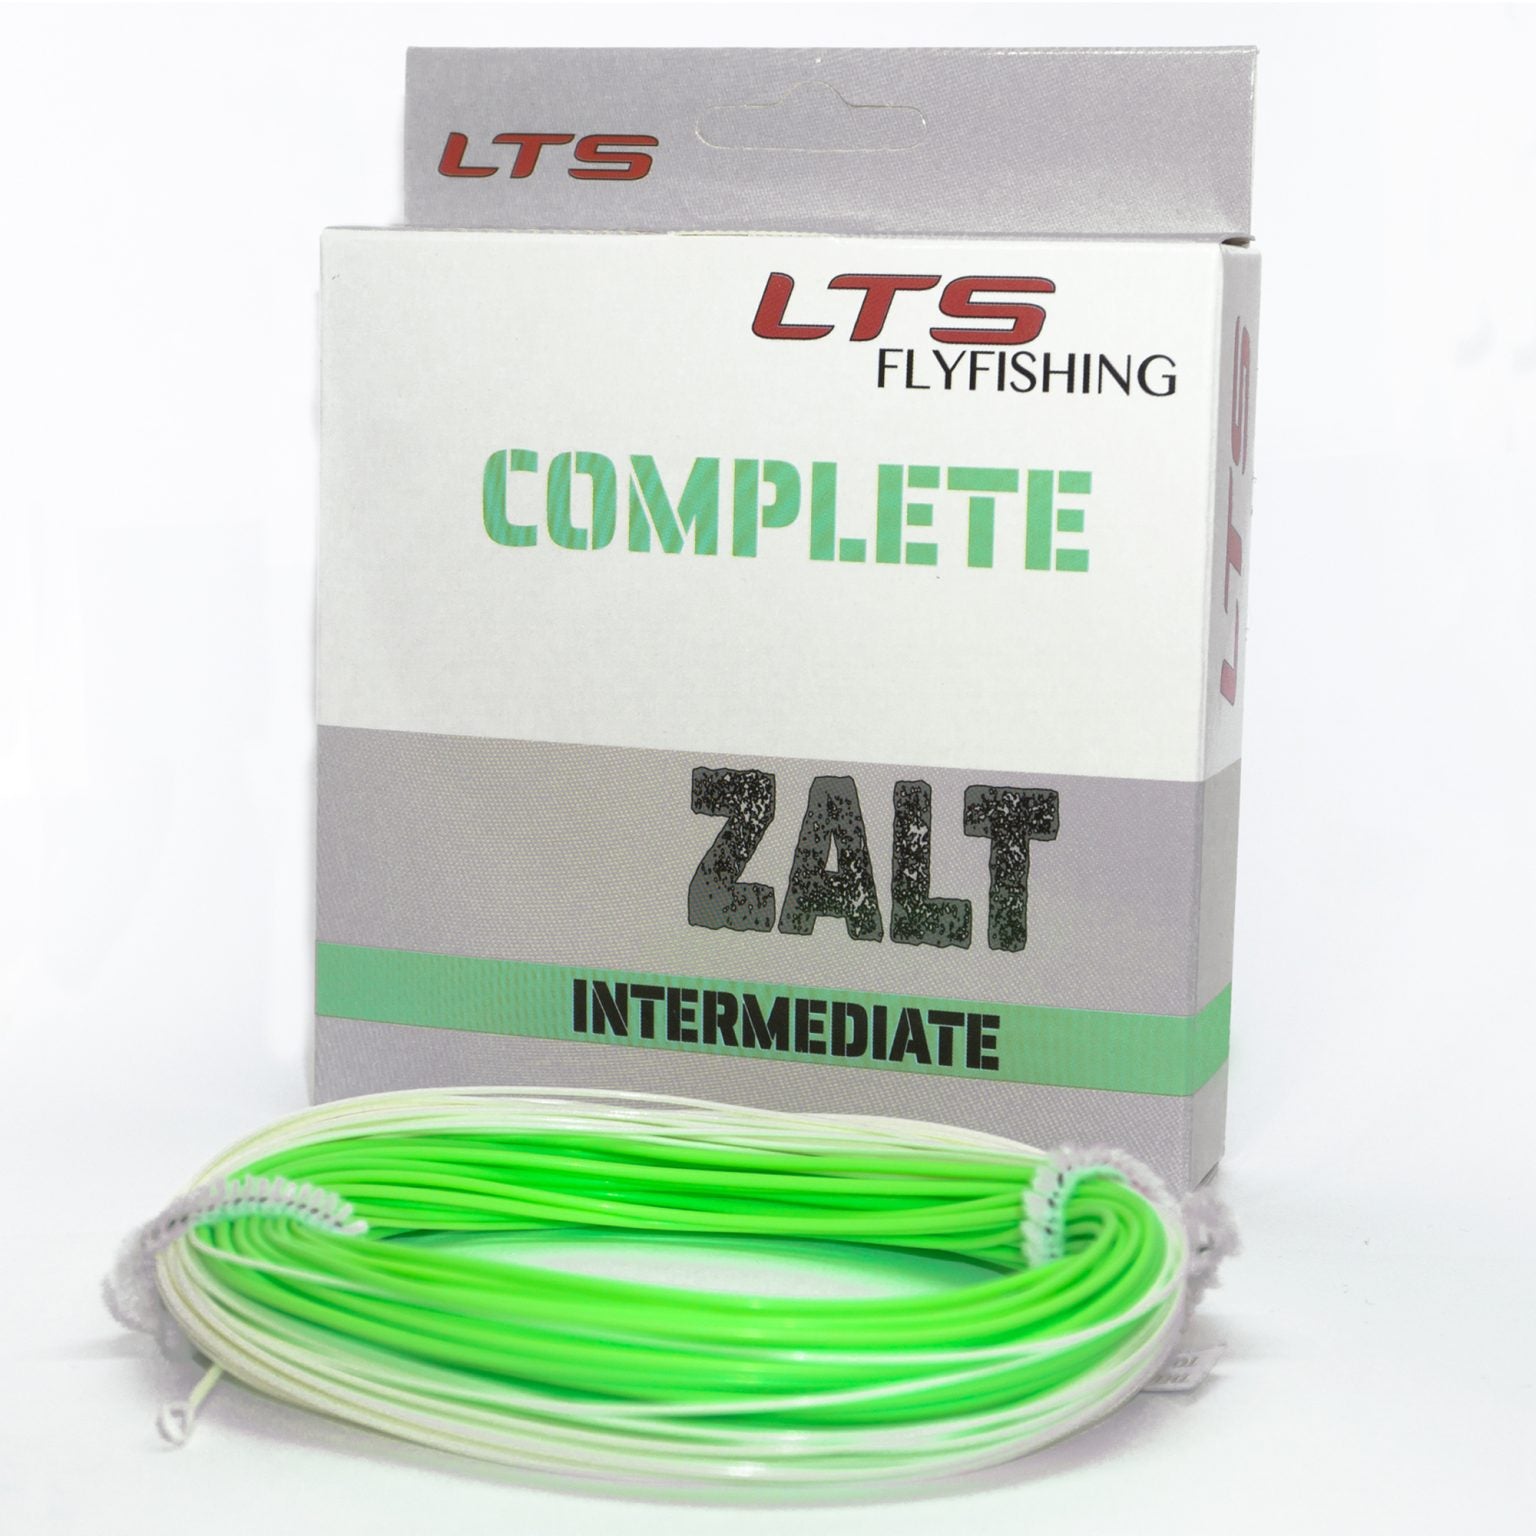 LTS Complete Zalt